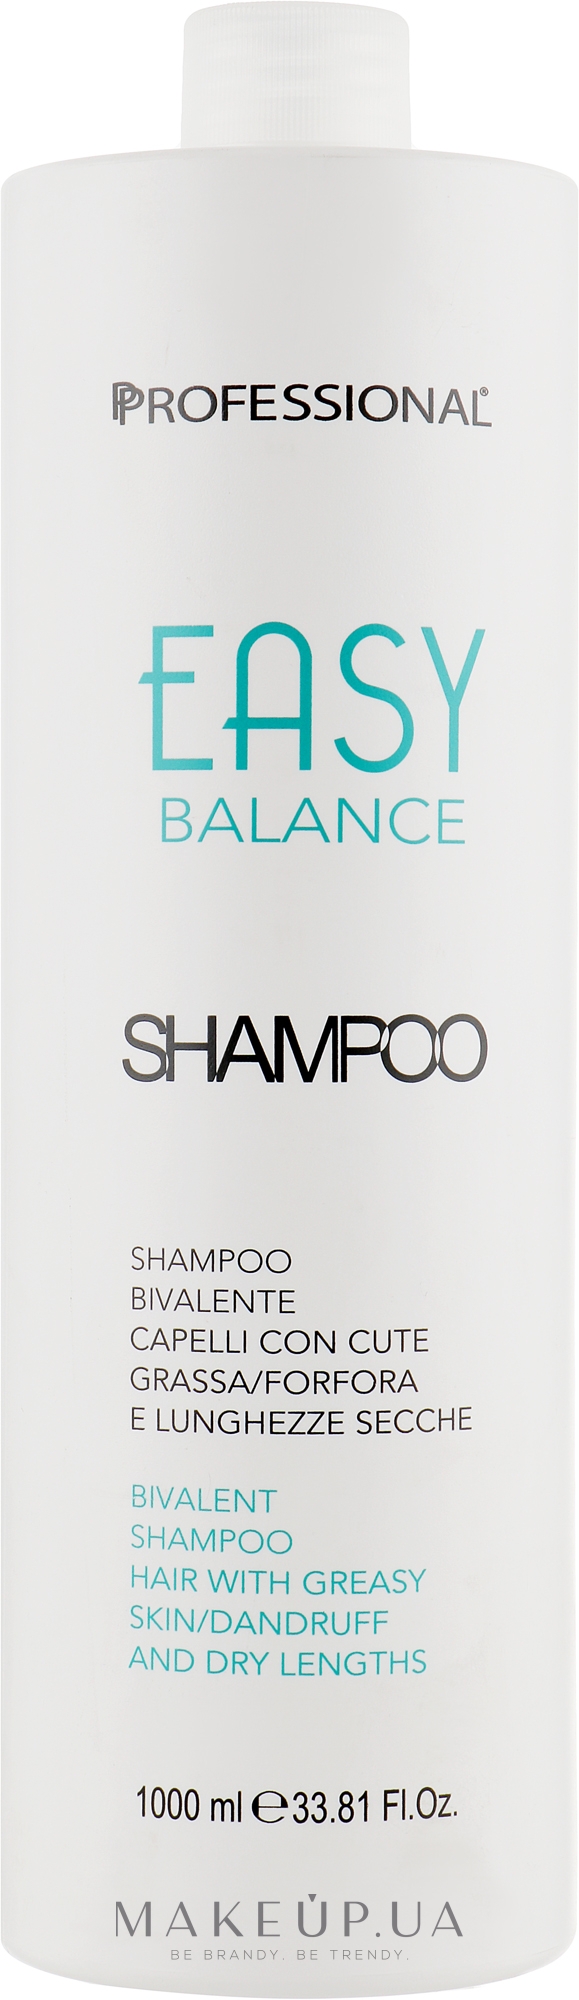 Бивалентный шампунь - Professional Easy Balance Shampoo — фото 1000ml